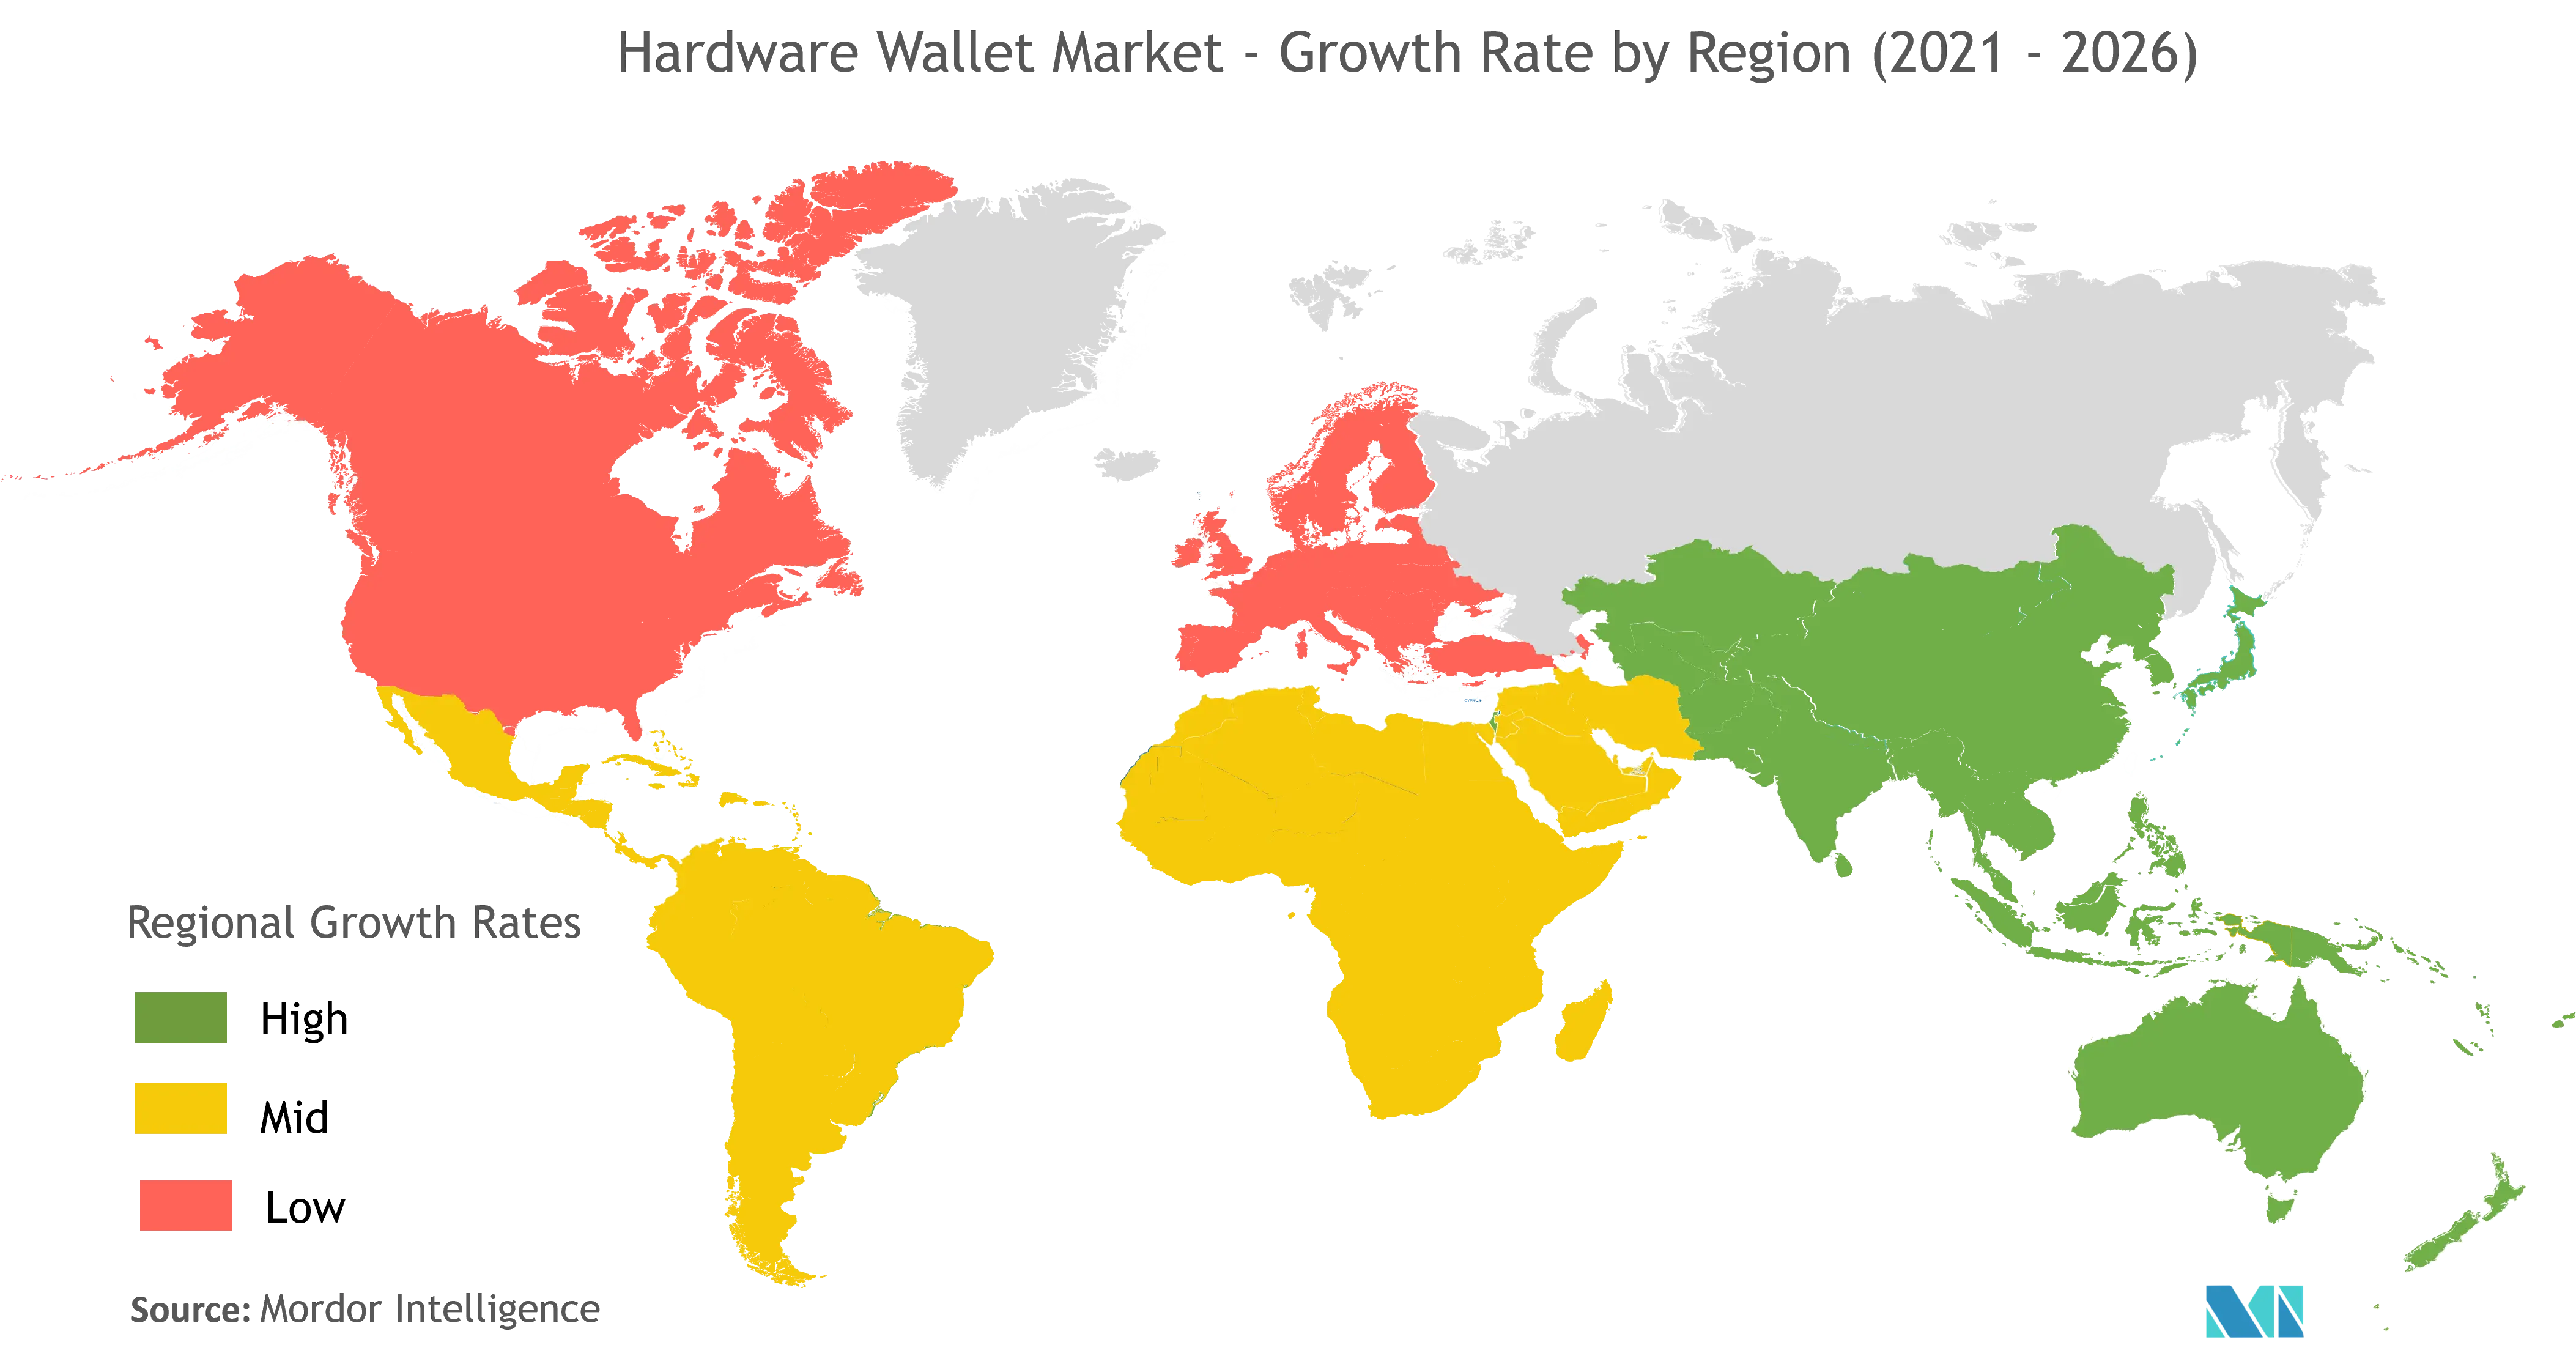 Hardware Wallet Market Growth